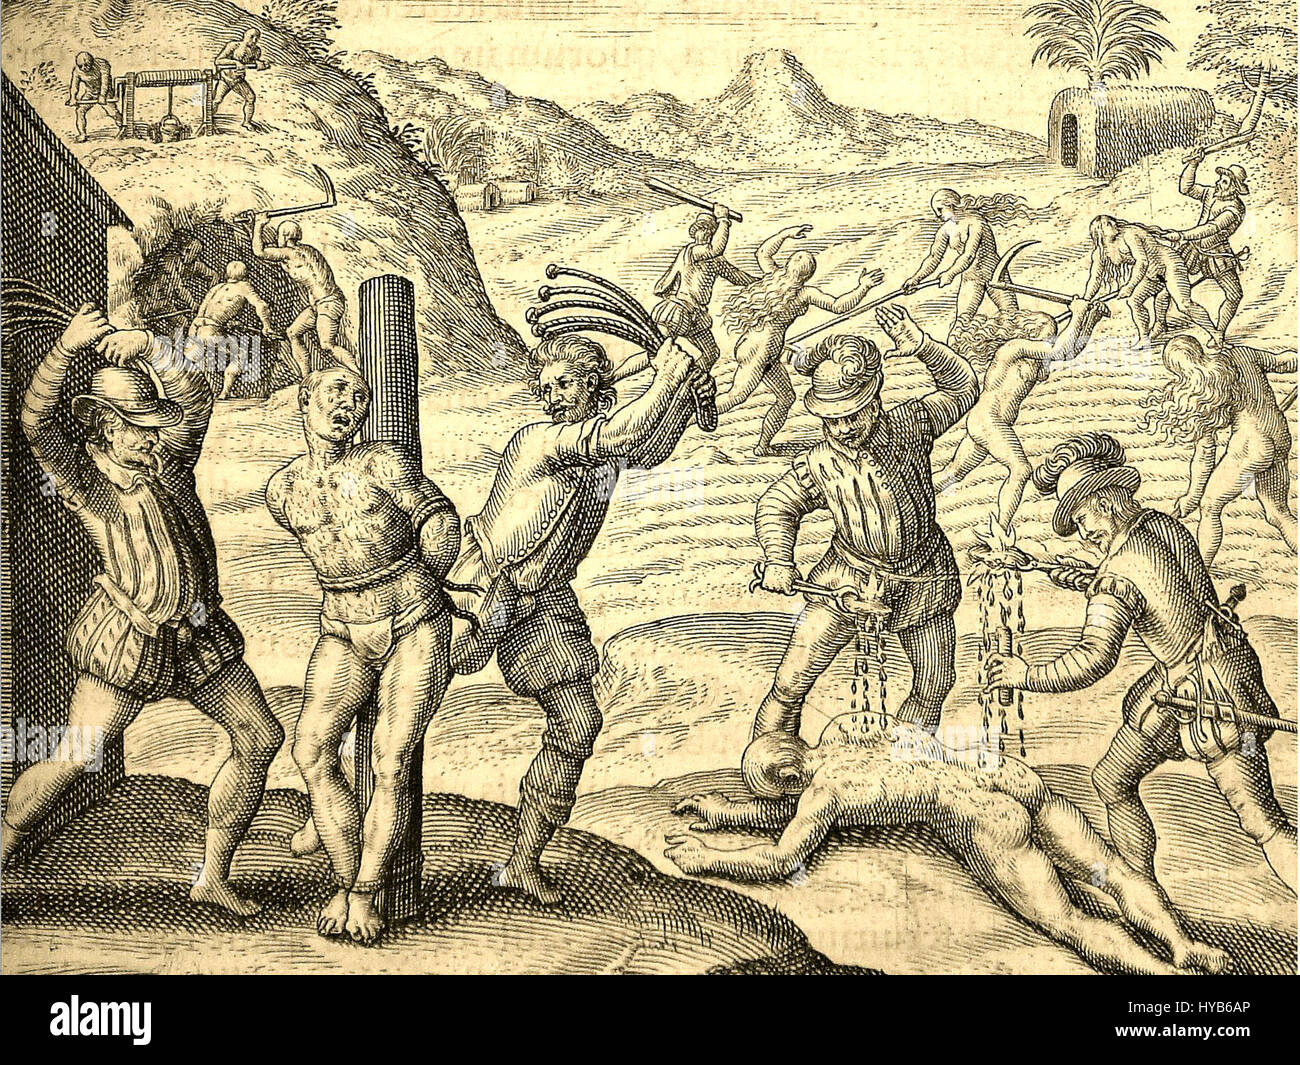 Conquistadors' abuses of Amerindians (1598 edition for las Casas' book) Stock Photo